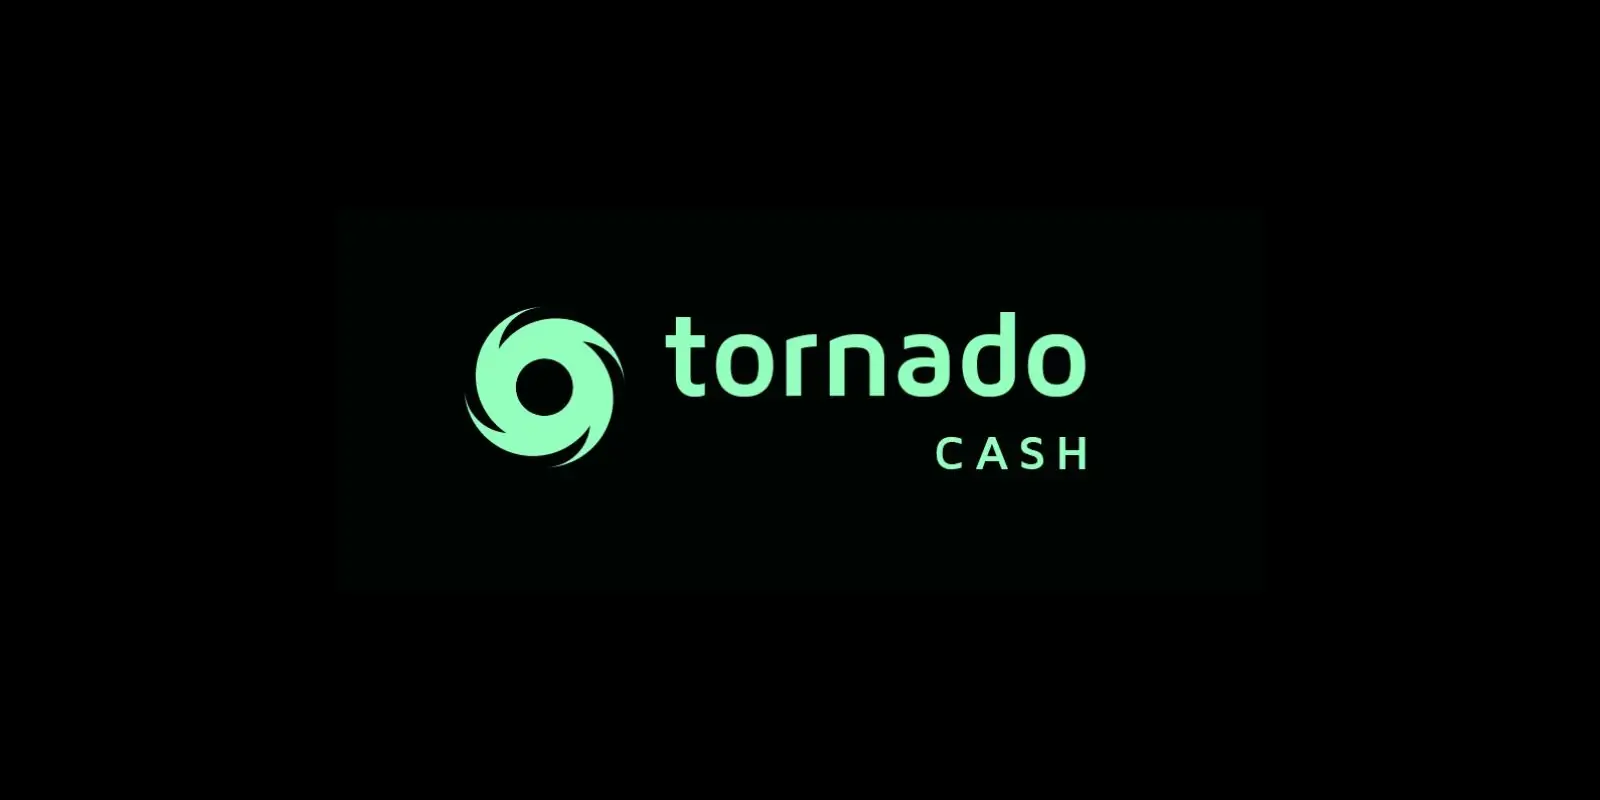 What Is Tornado Cash